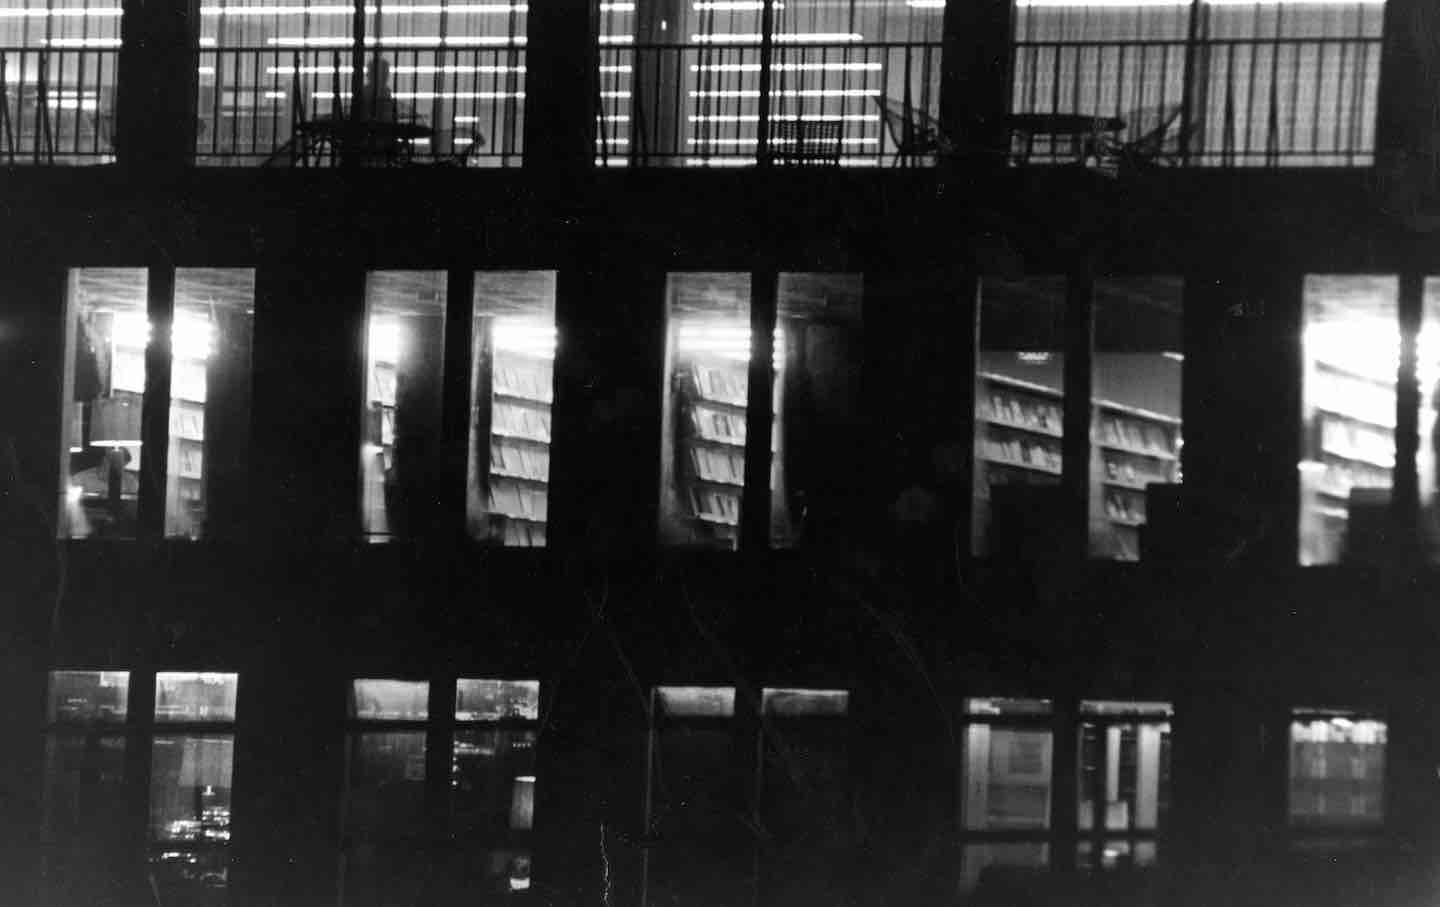 The Milton S. Eisenhower Library at Johns Hopkins University, 1965.